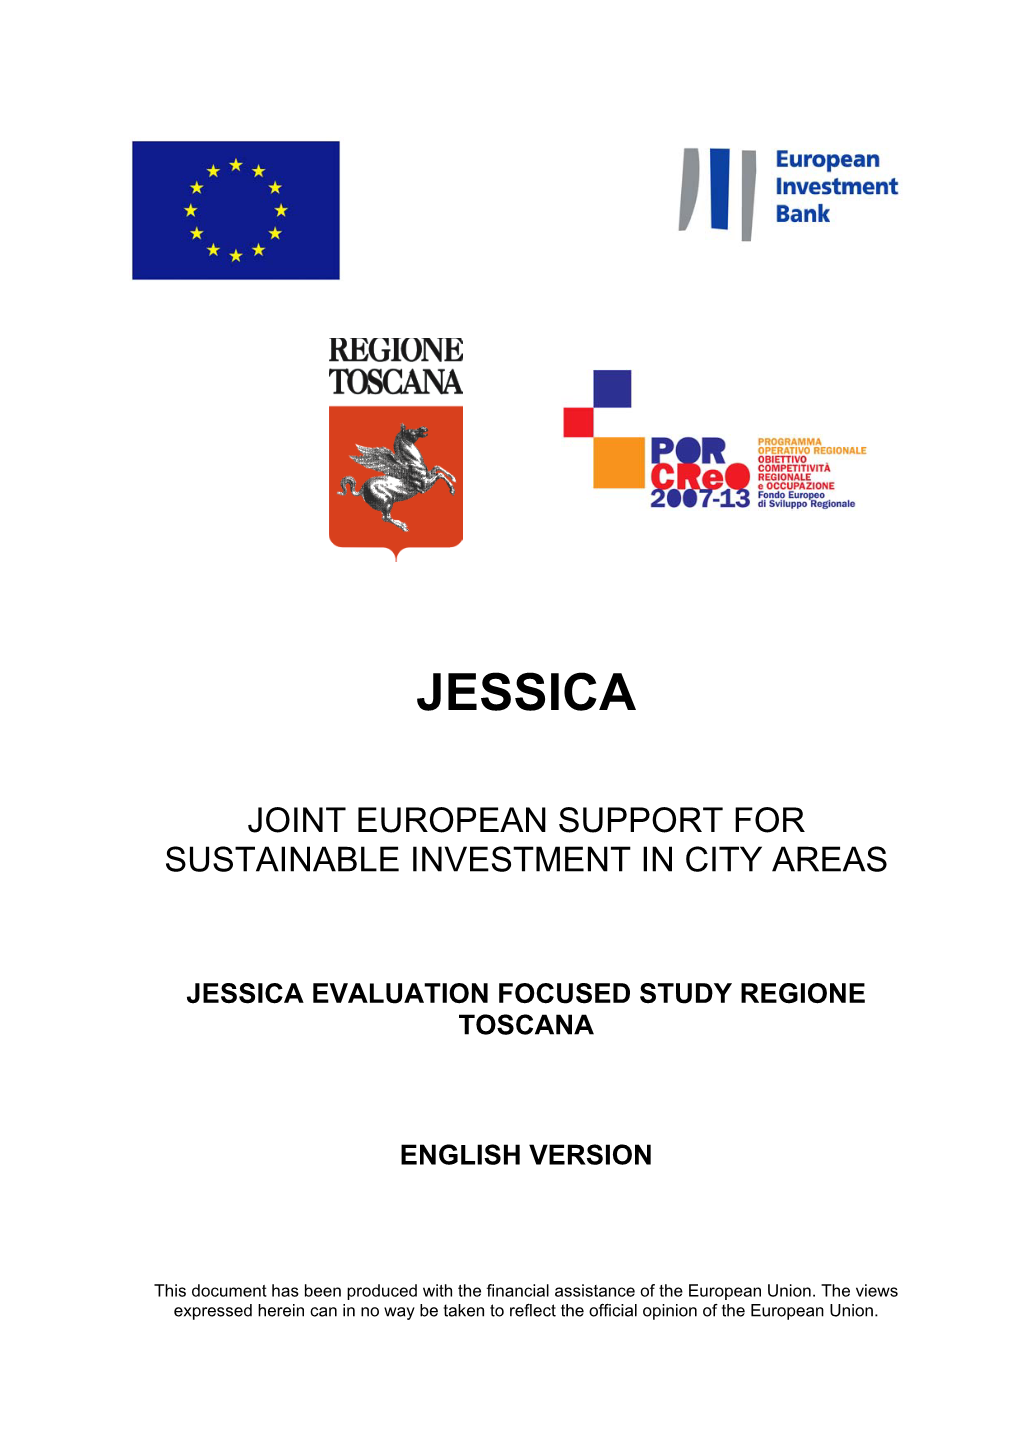 Jessica Evaluation Focused Study Regione Toscana